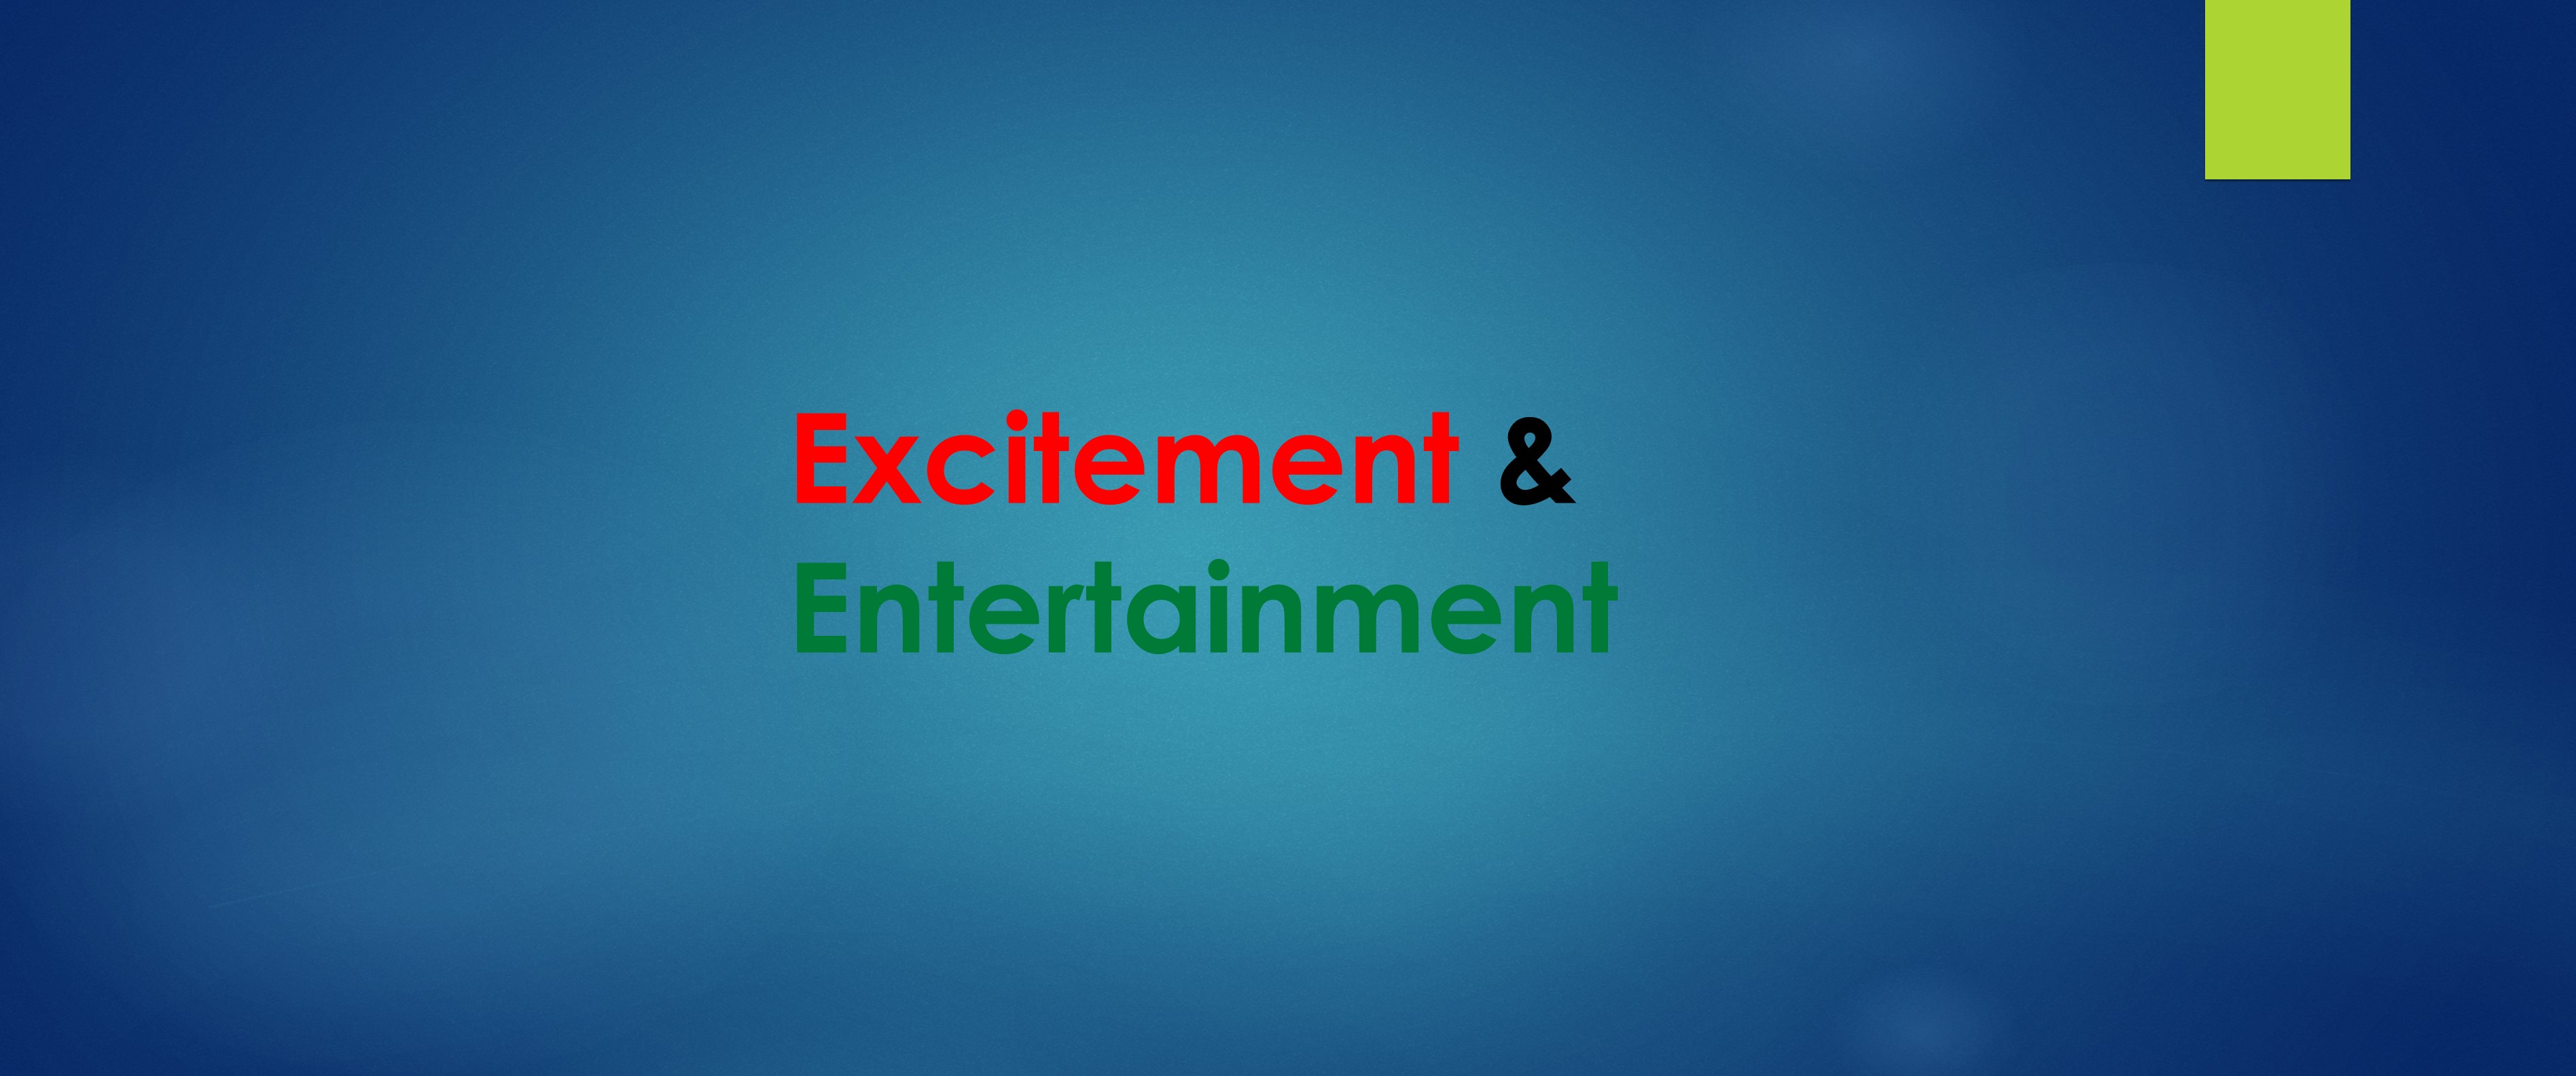 Excitement & Entertainment Videos